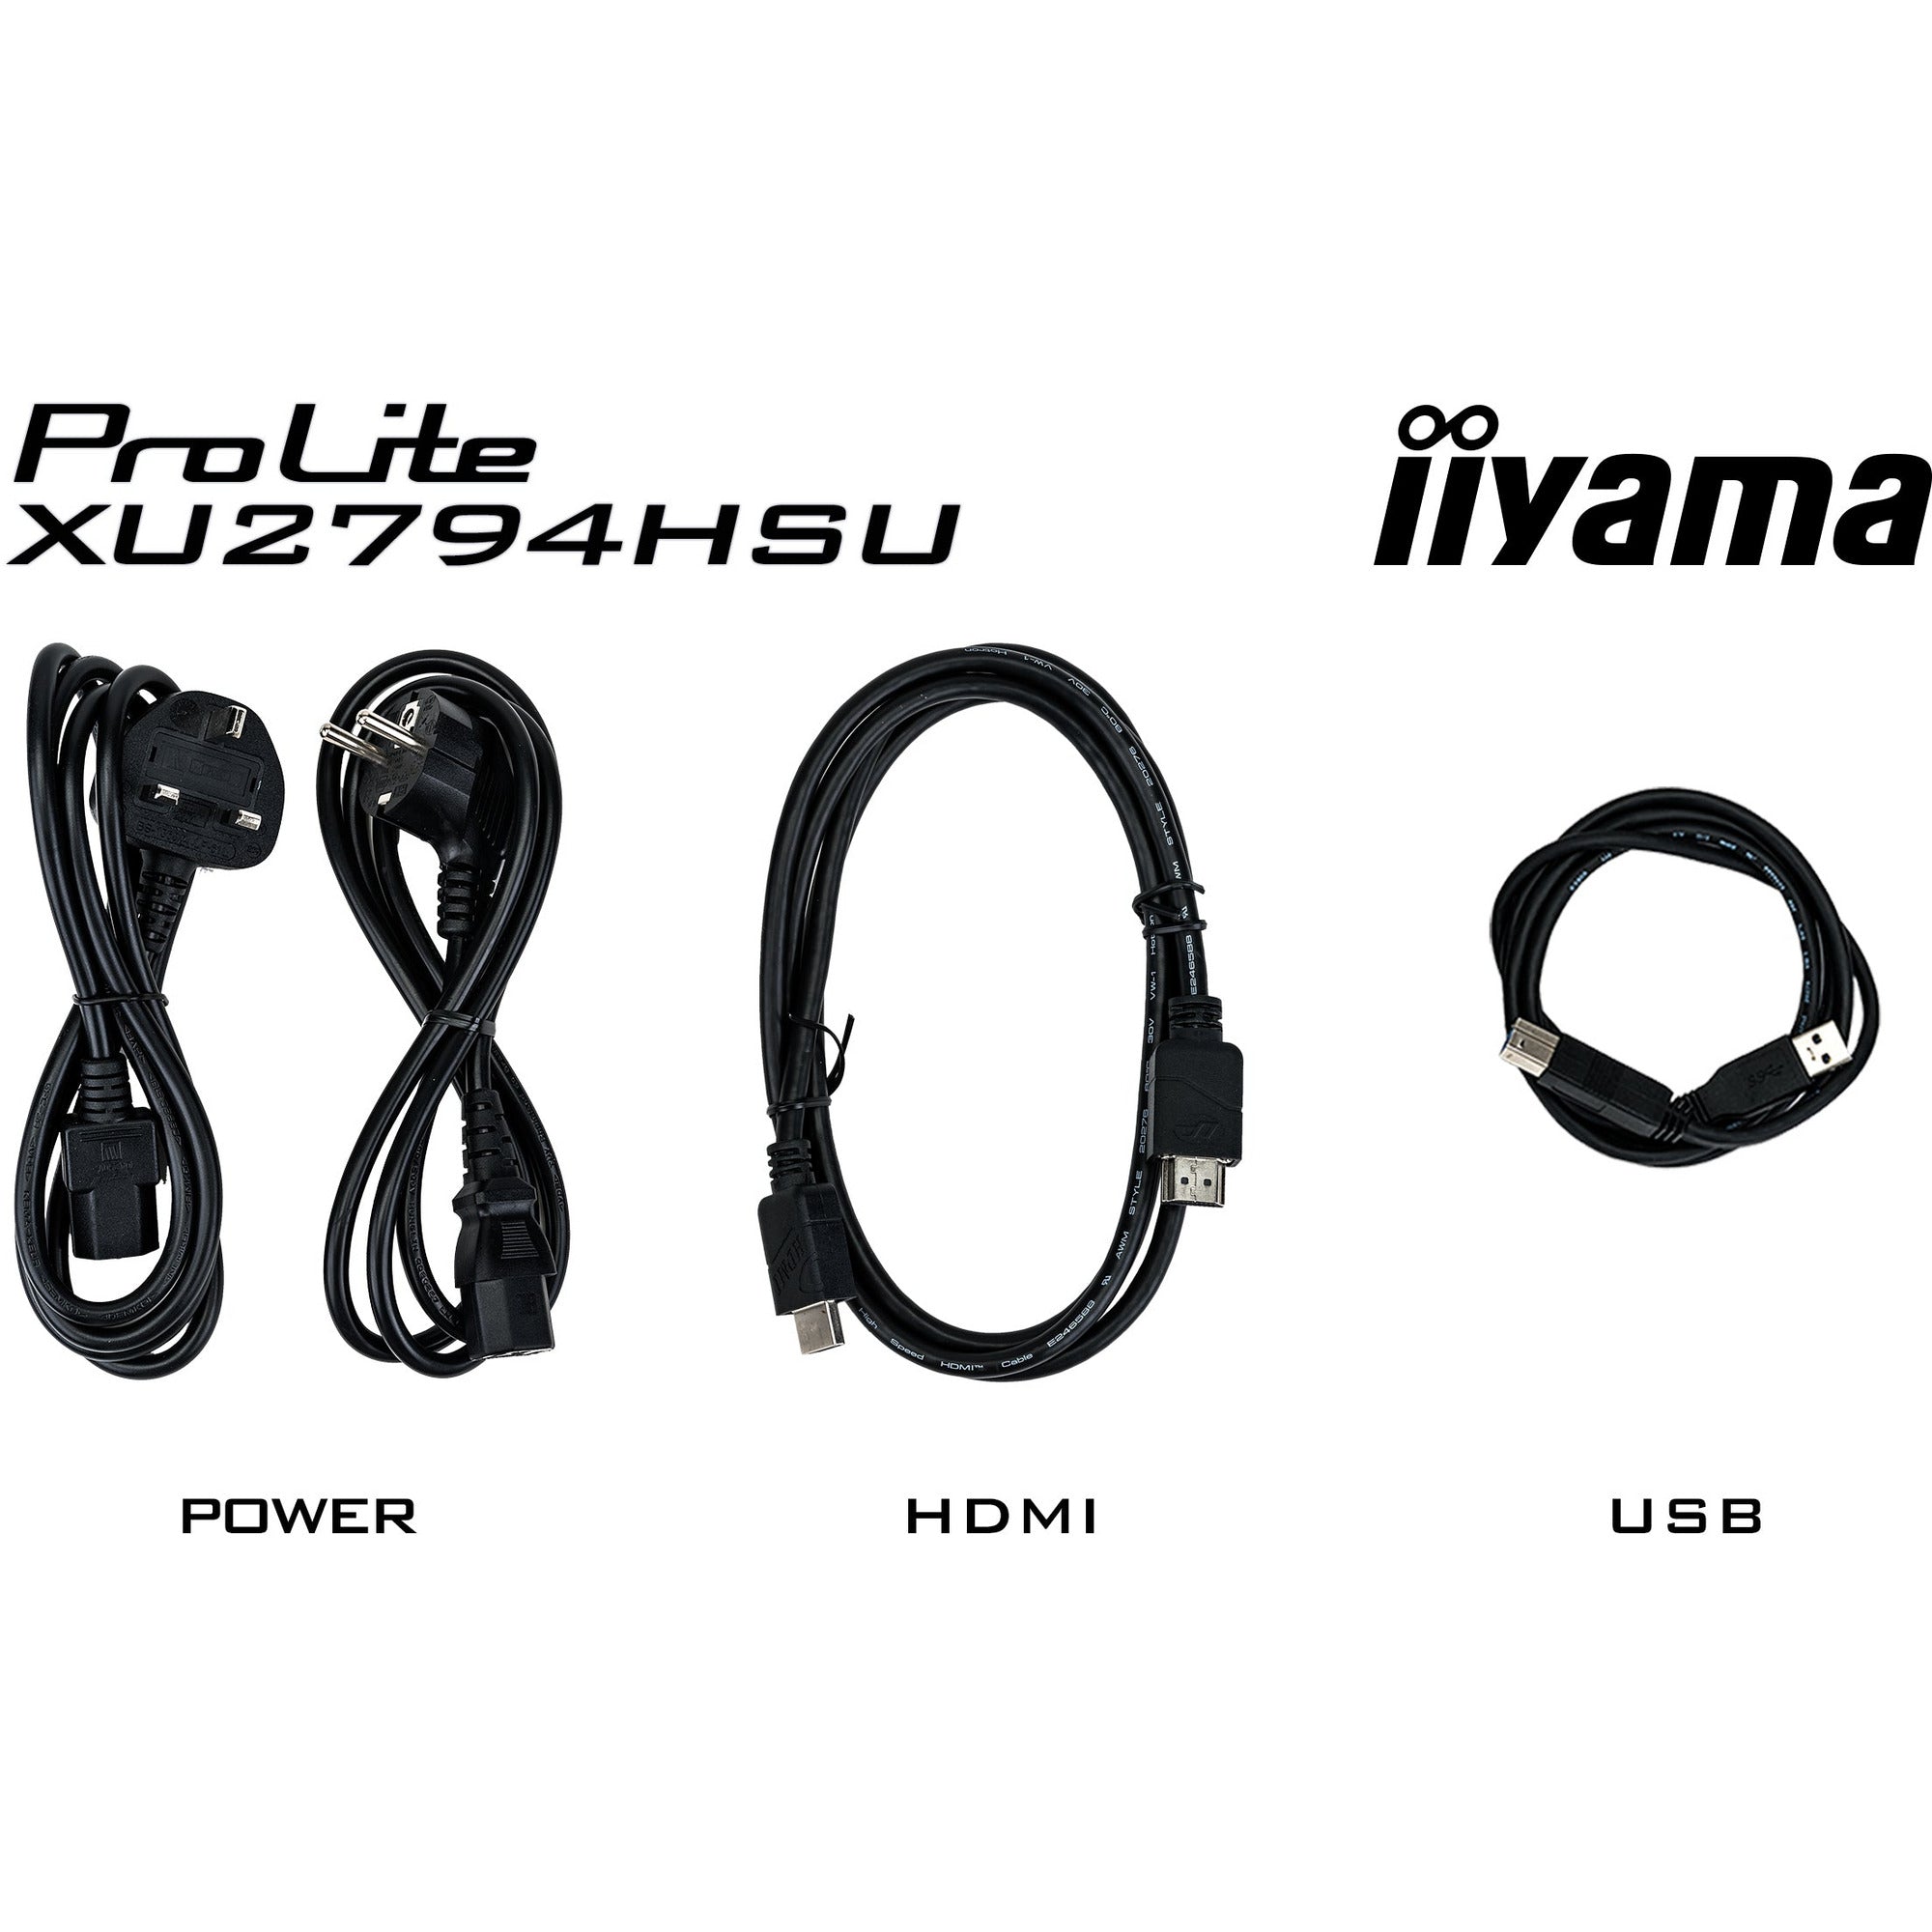 Iiyama ProLite XU2794HSU-B1 27” Full HD VA Monitor with Height Adjust Stand